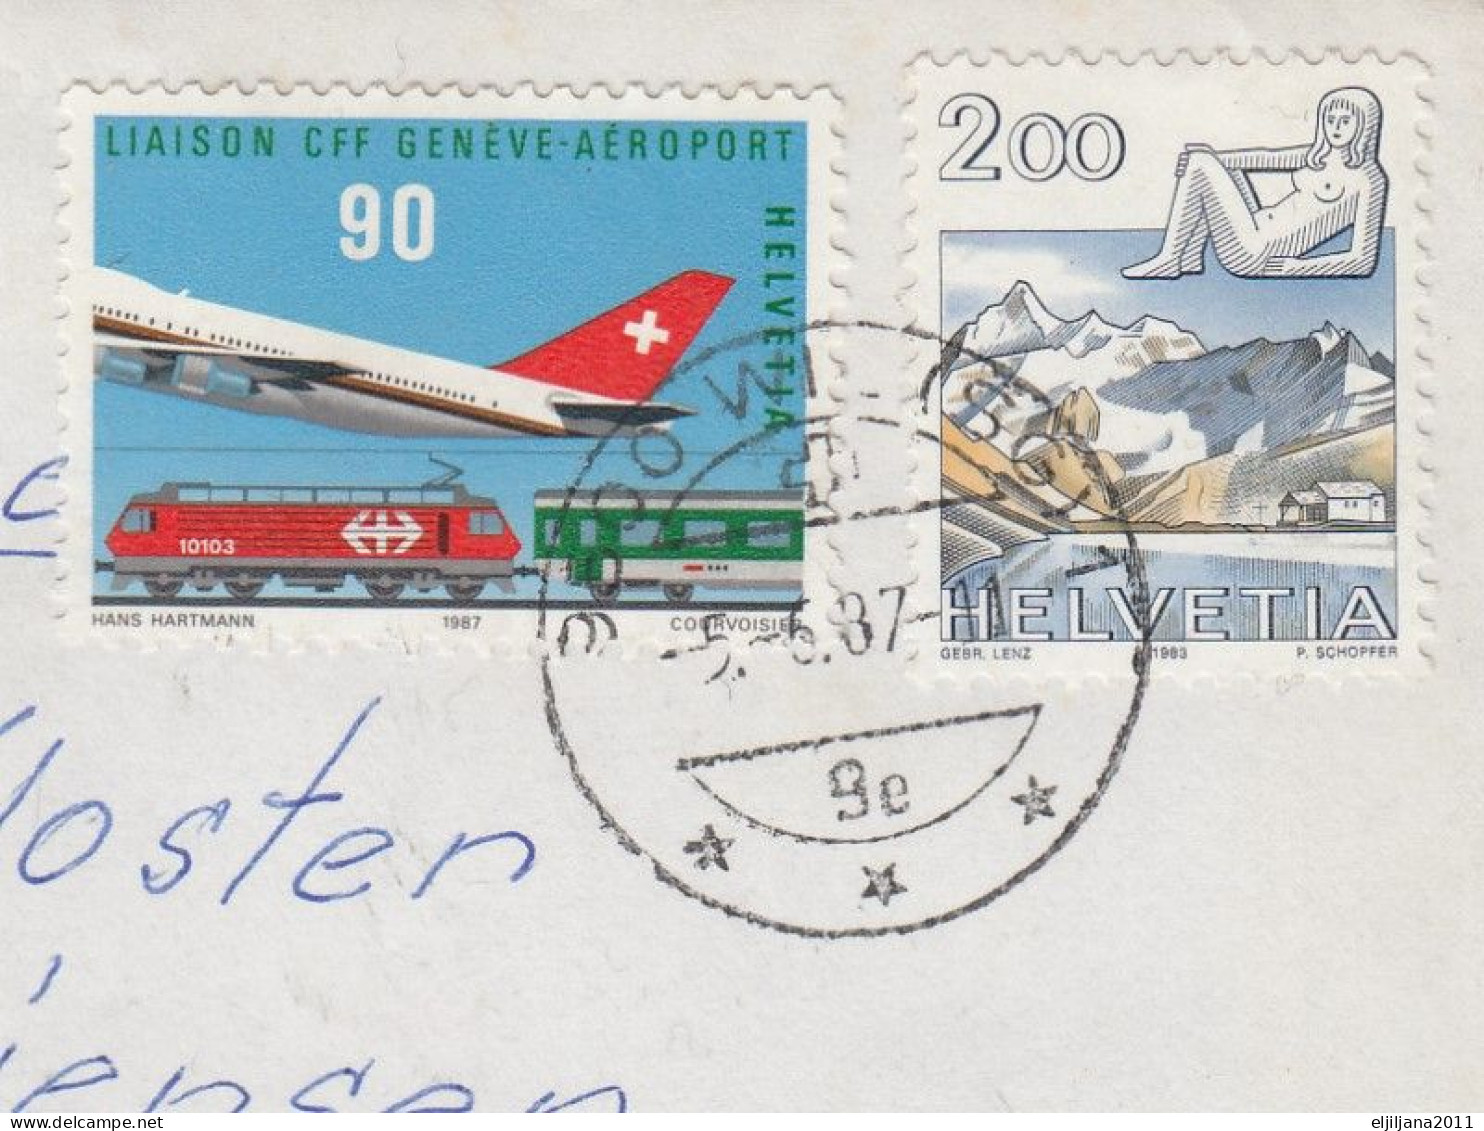 Switzerland / Helvetia / Schweiz / Suisse 1987 ⁕ Nice Cover Registered Mail Wil SG 1 ⁕ See Scan - Briefe U. Dokumente